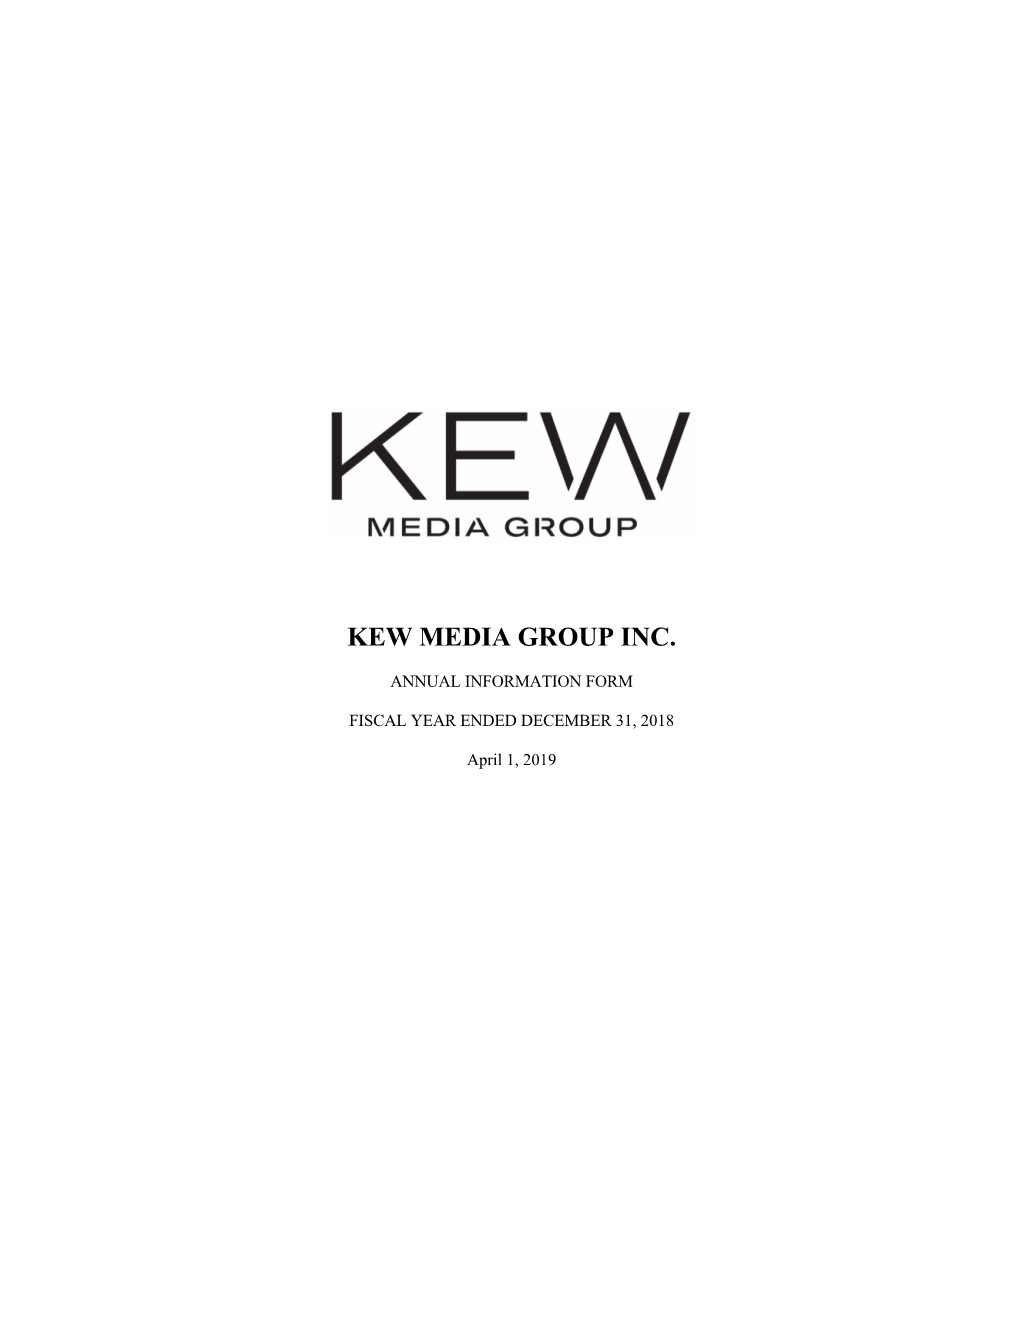 Kew Media Group Inc